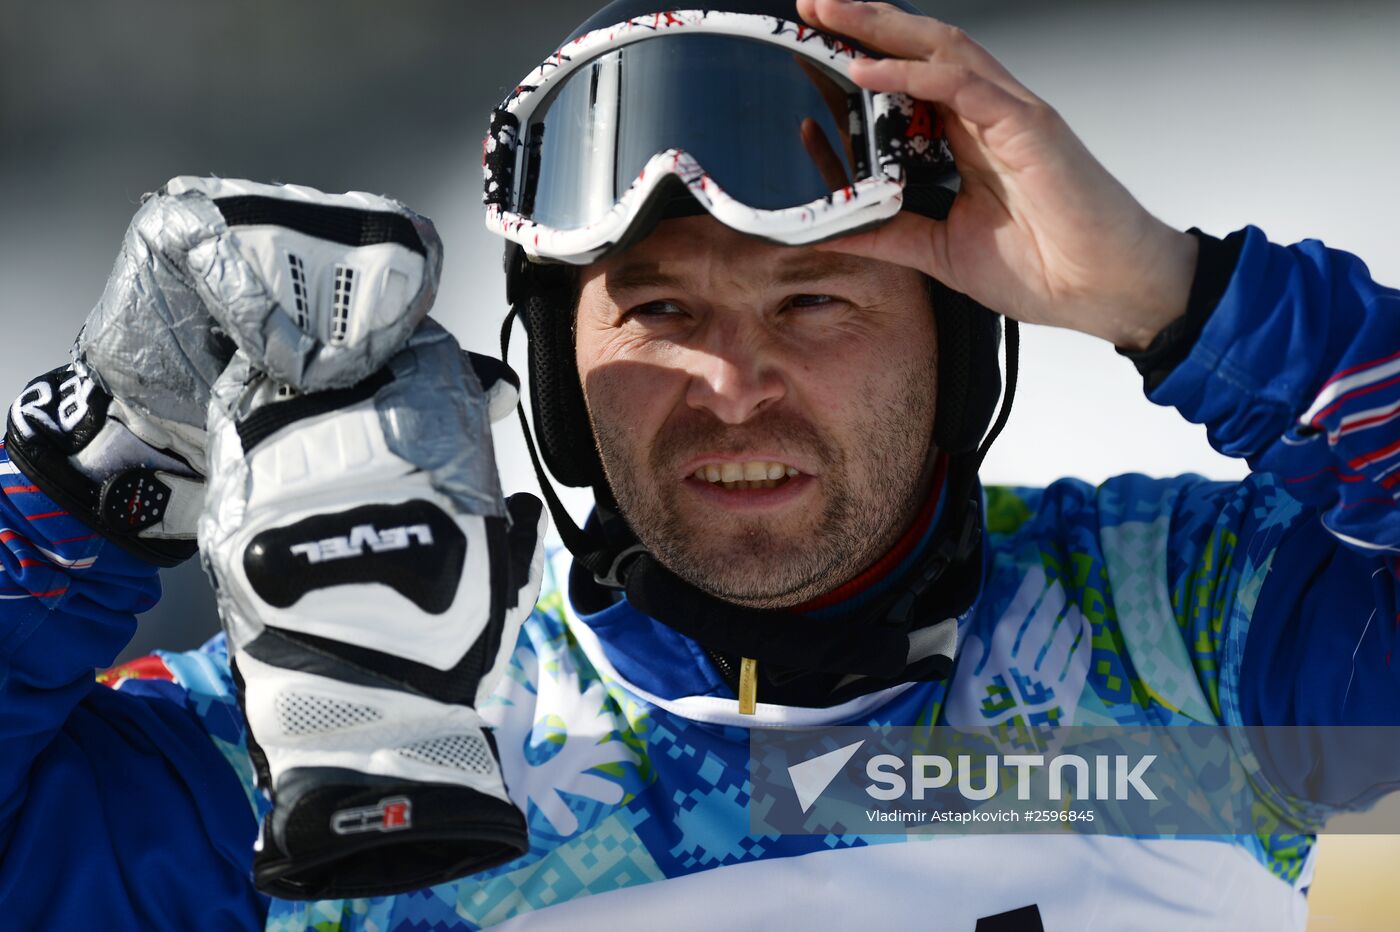 2015 Deaflympics. Snowboarding. Parallel giant slalom